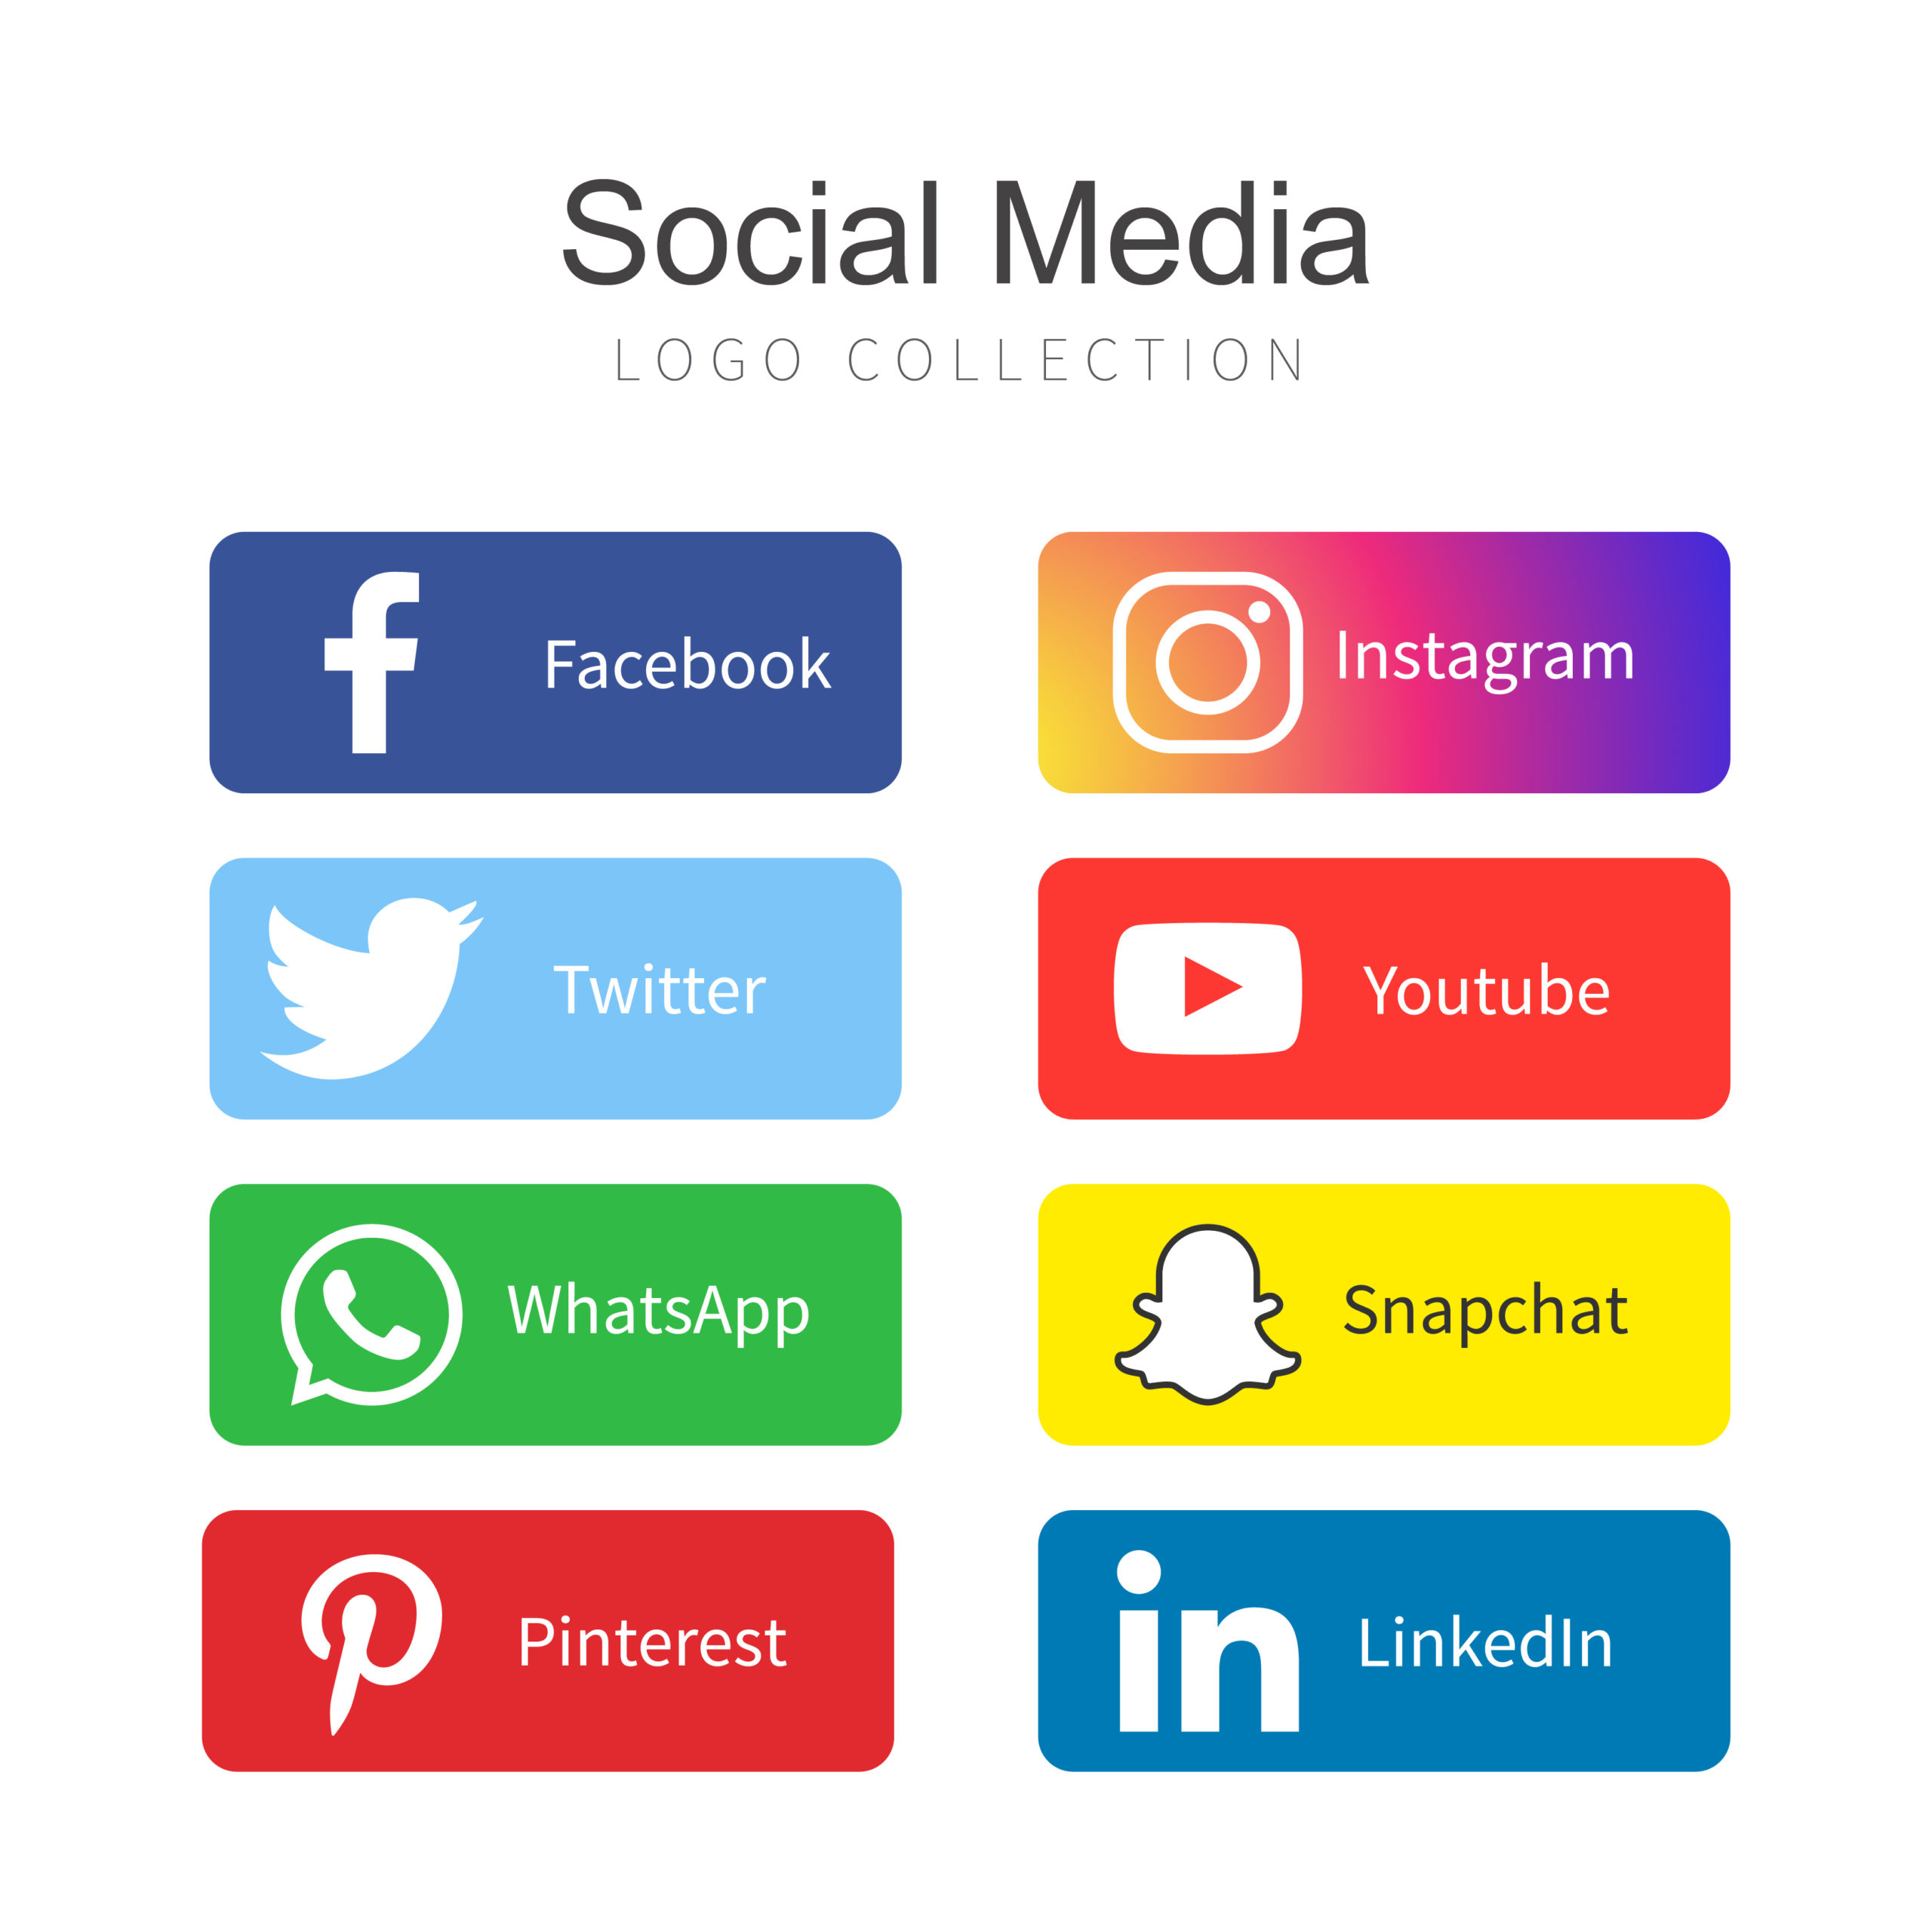 social media logo for business cards 2